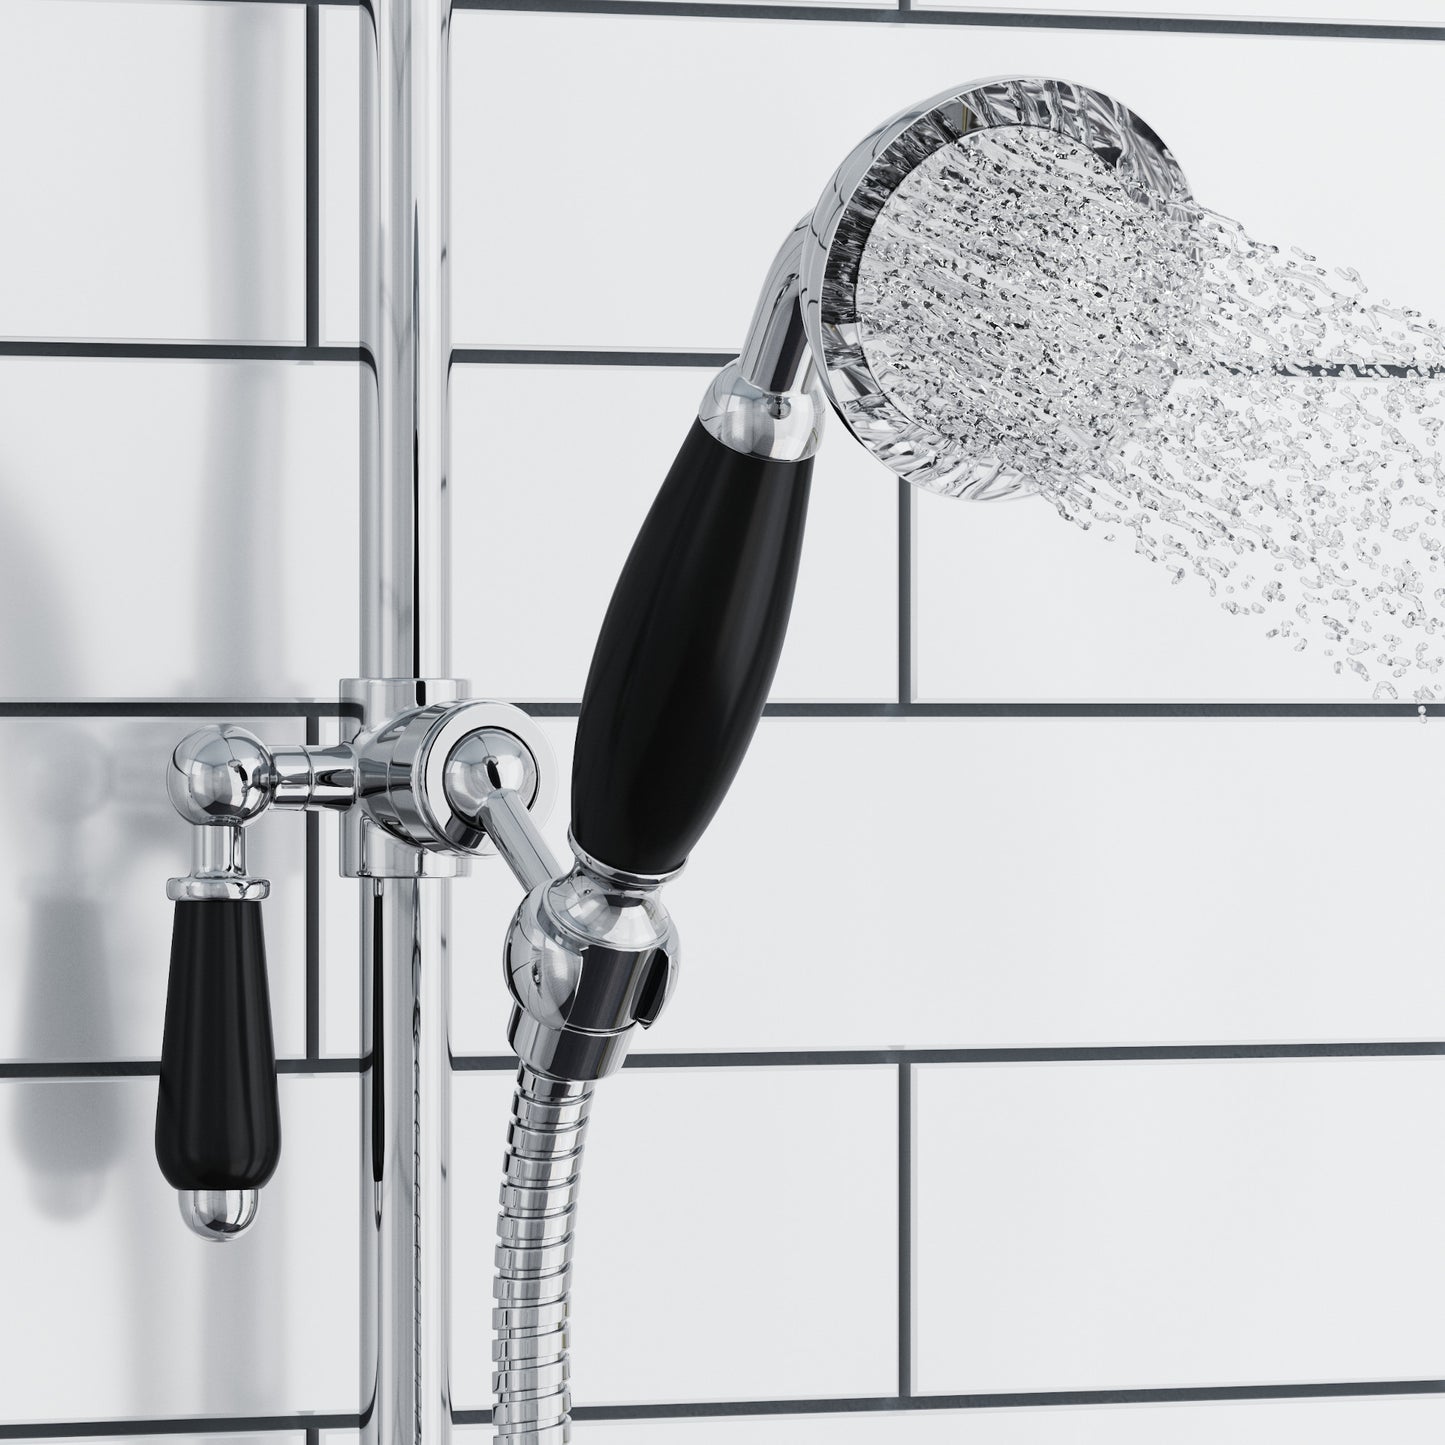 Trafalgar traditional thermostatic shower set two outlet incl. angled riser rail, rain shower head 200mm, handset - chrome